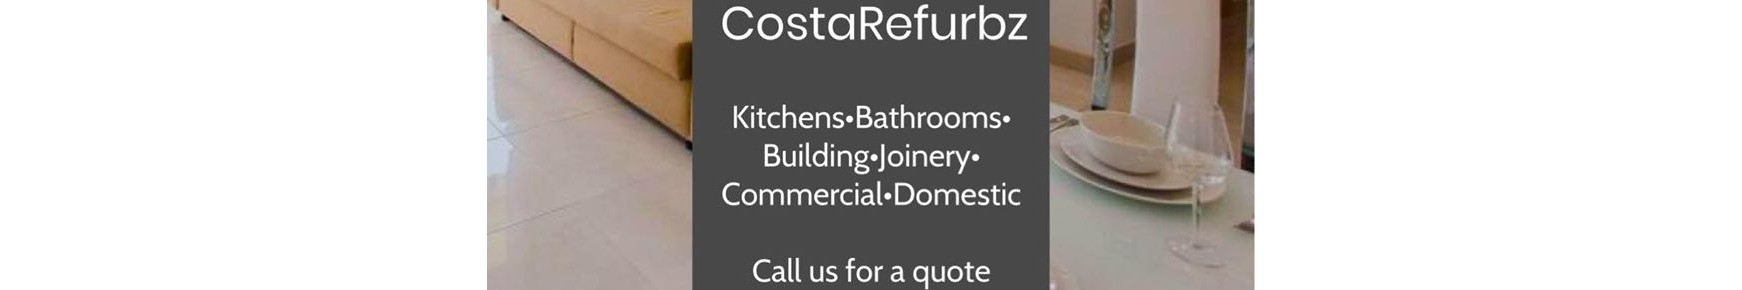 CostaRefurbz Furniture Installation and Home Improvements